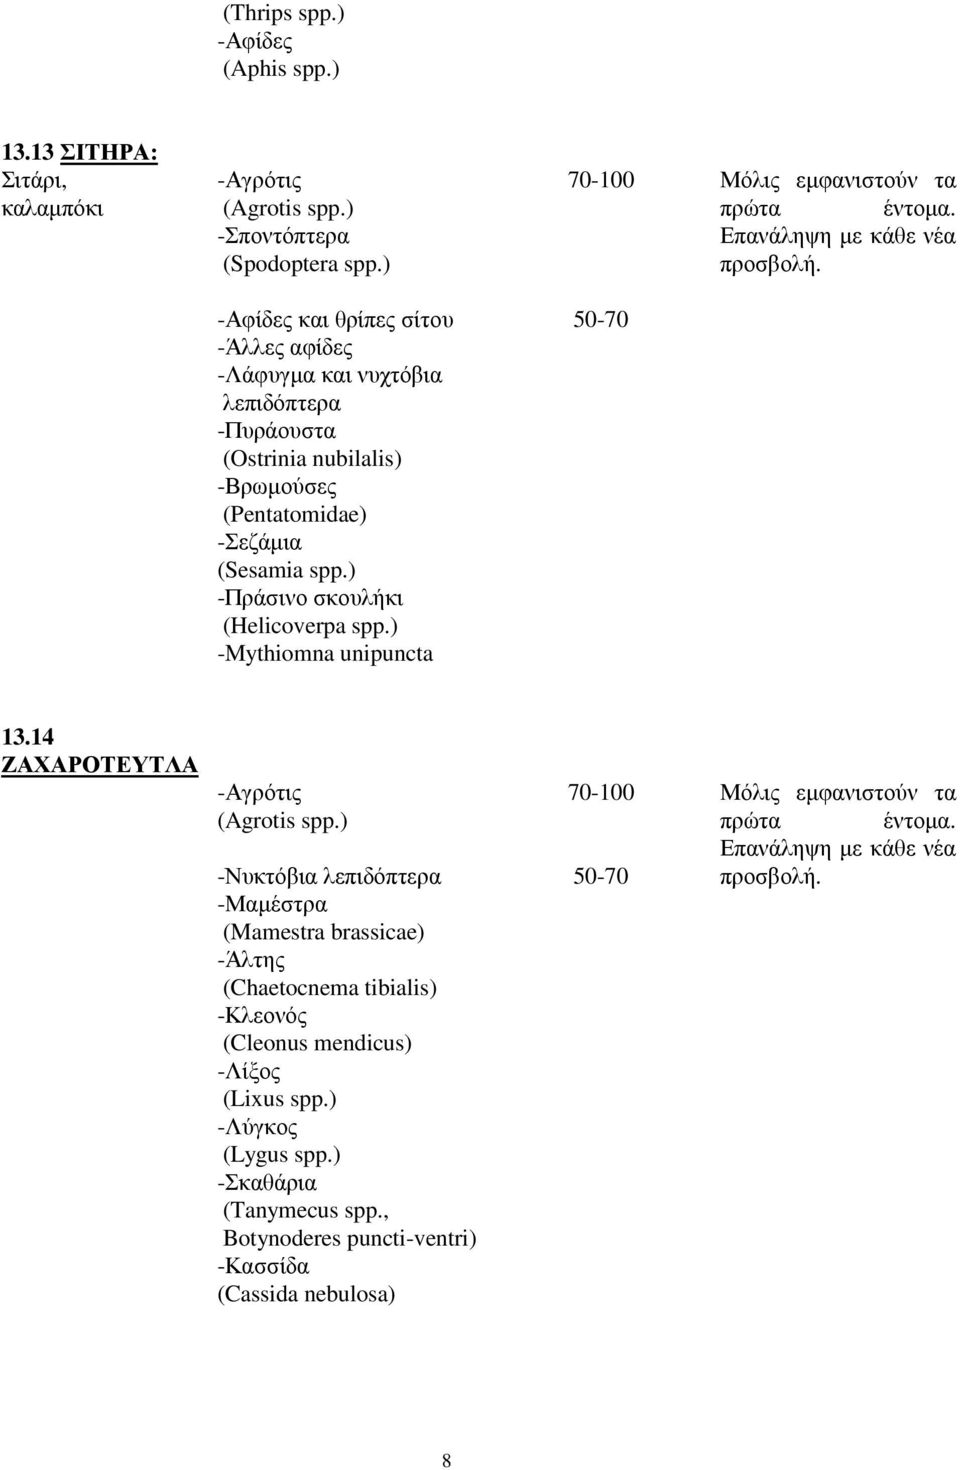 (Sesamia spp.) -Πράσινο σκουλήκι (Helicoverpa spp.) -Mythiomna unipuncta 13.